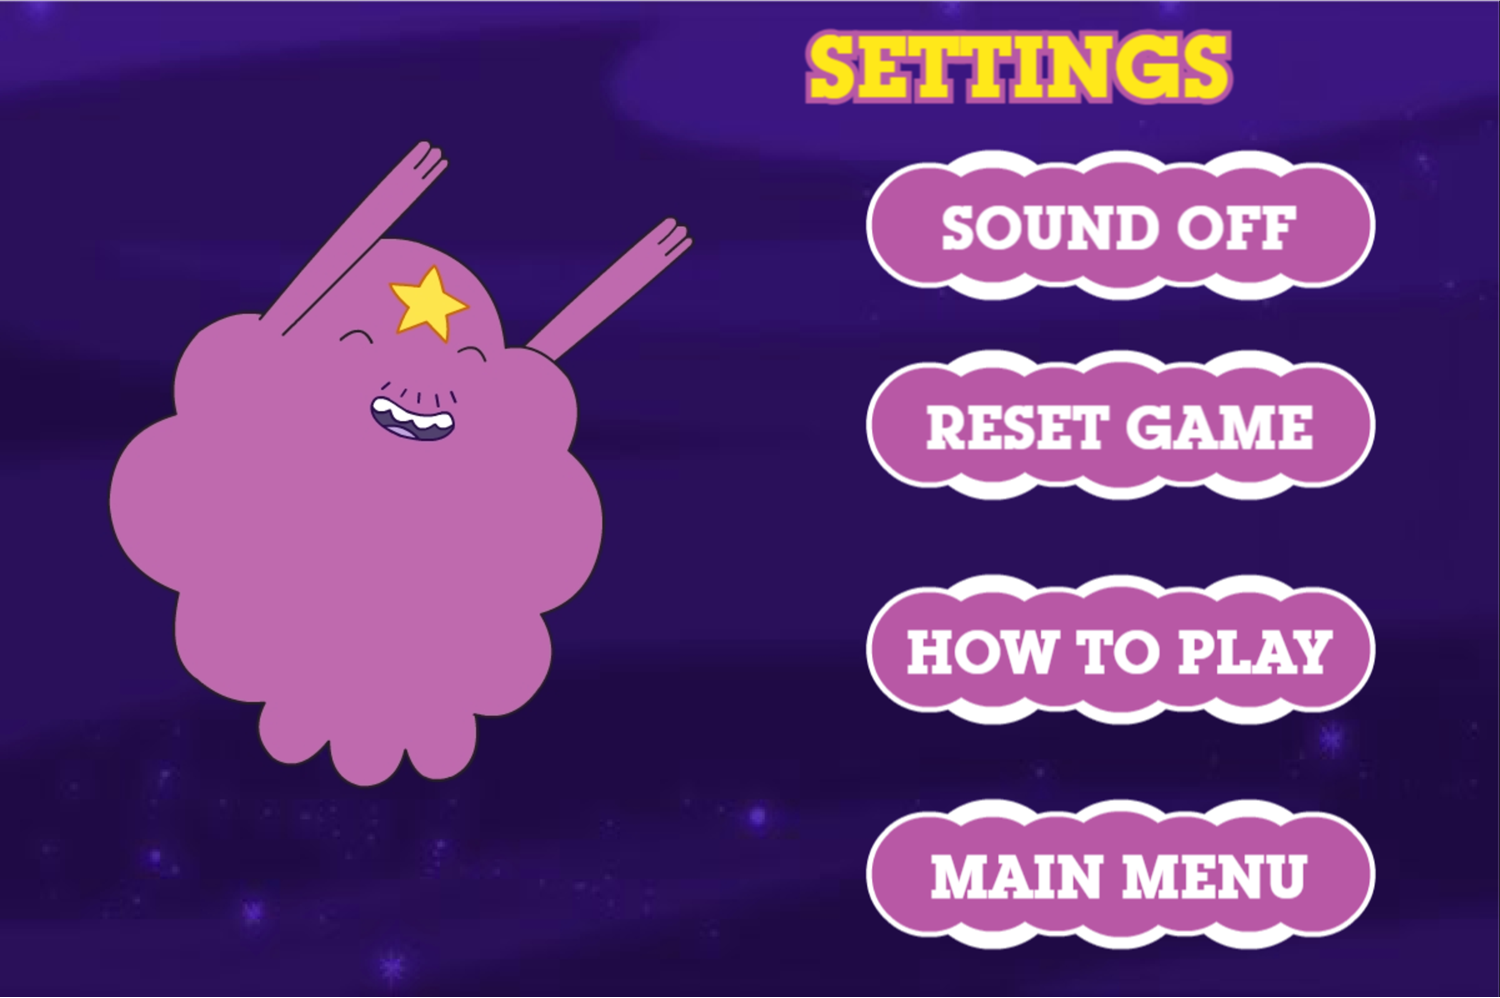 Adventure Time These Lumps Game Settings Screenshot.